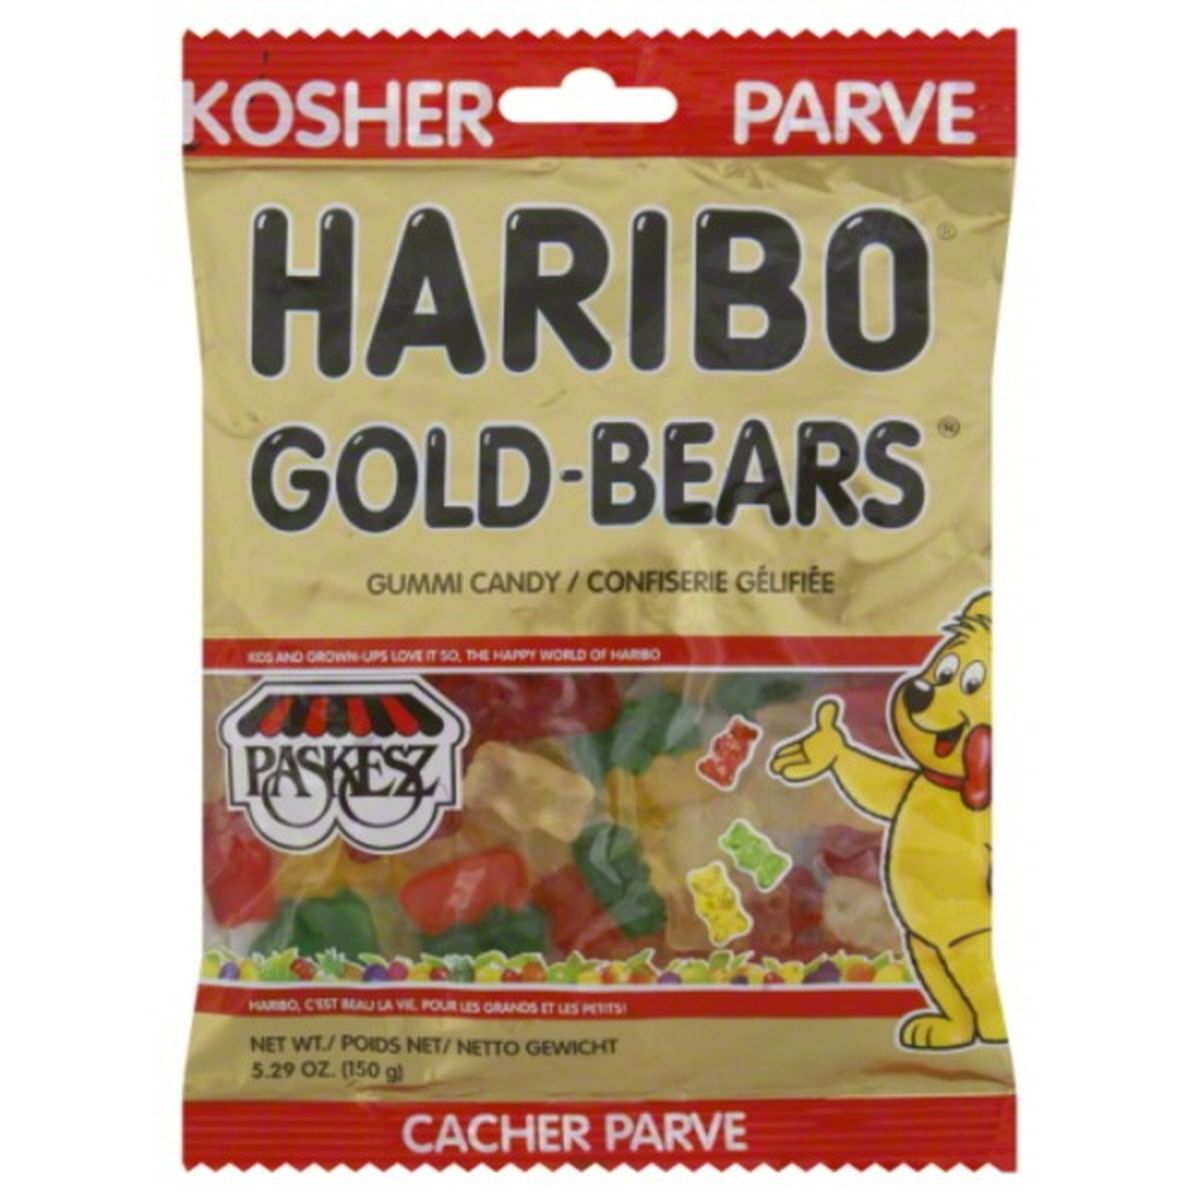 Calories in HARIBO Gold-Bears Gummi Candy